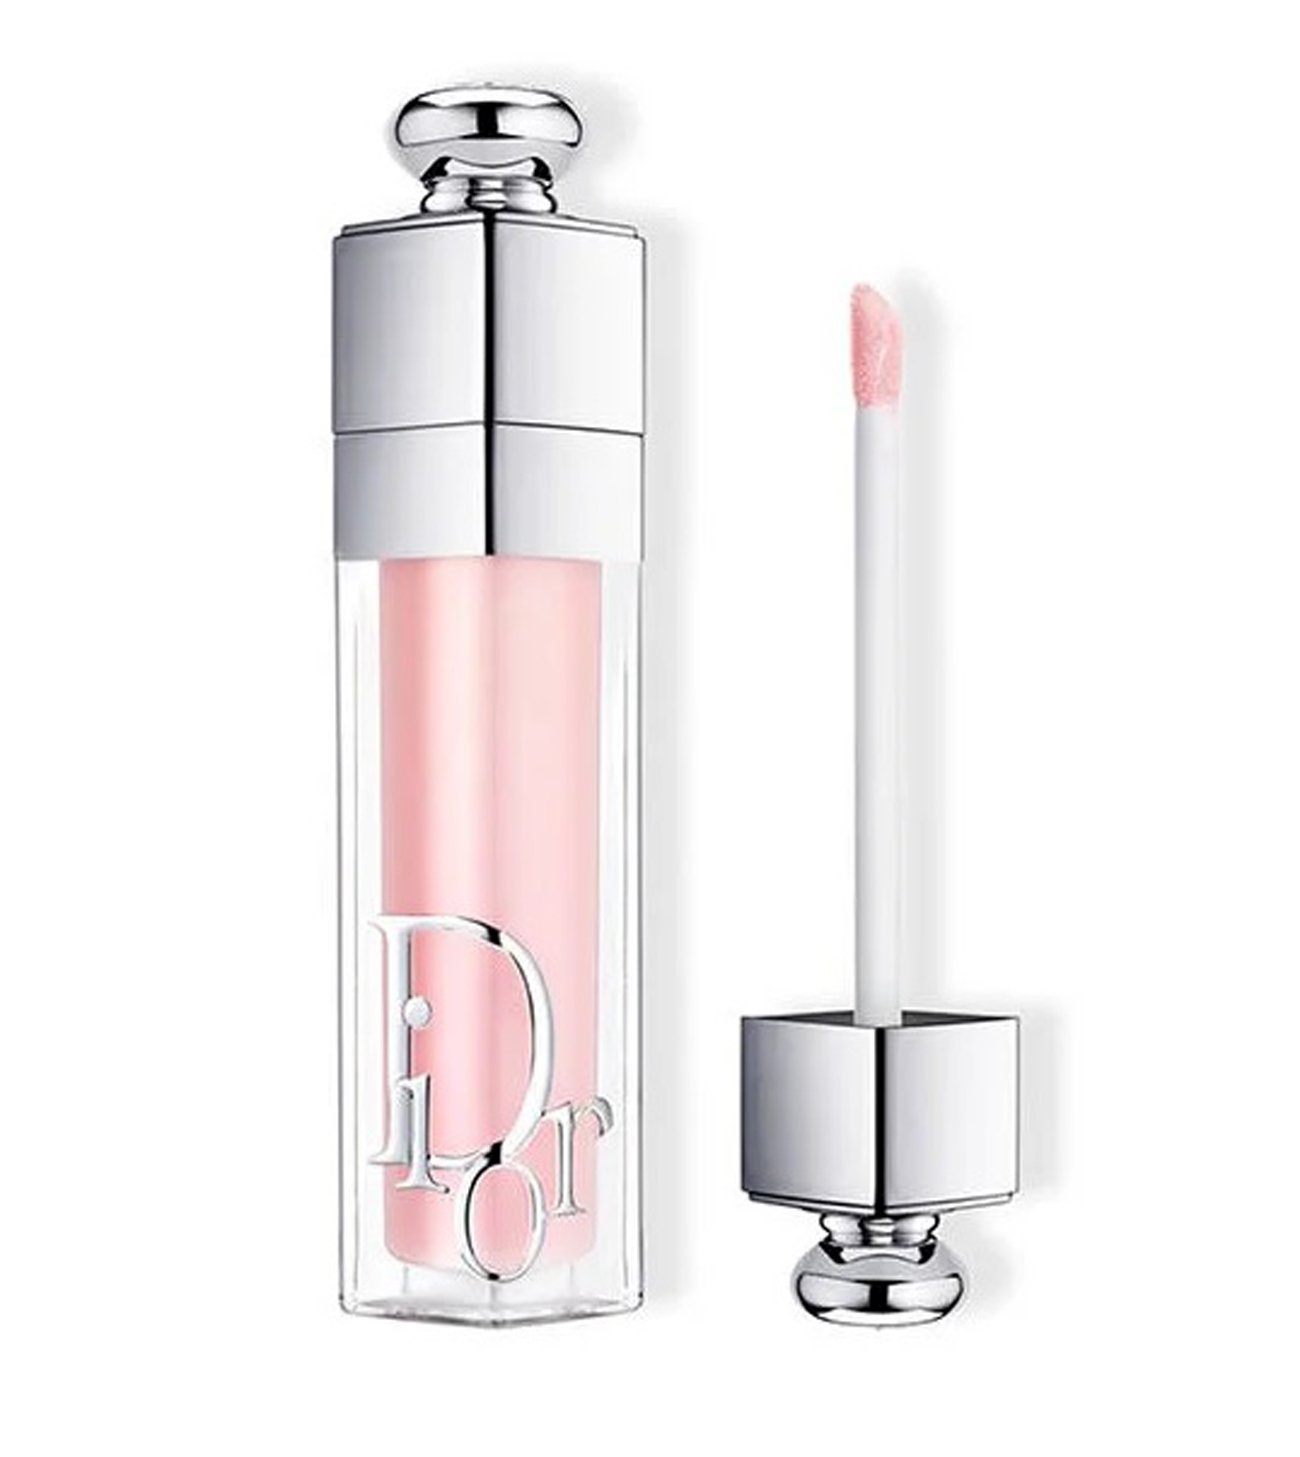 Christian Dior Addict Lip Maximizer Gloss for volume and shine